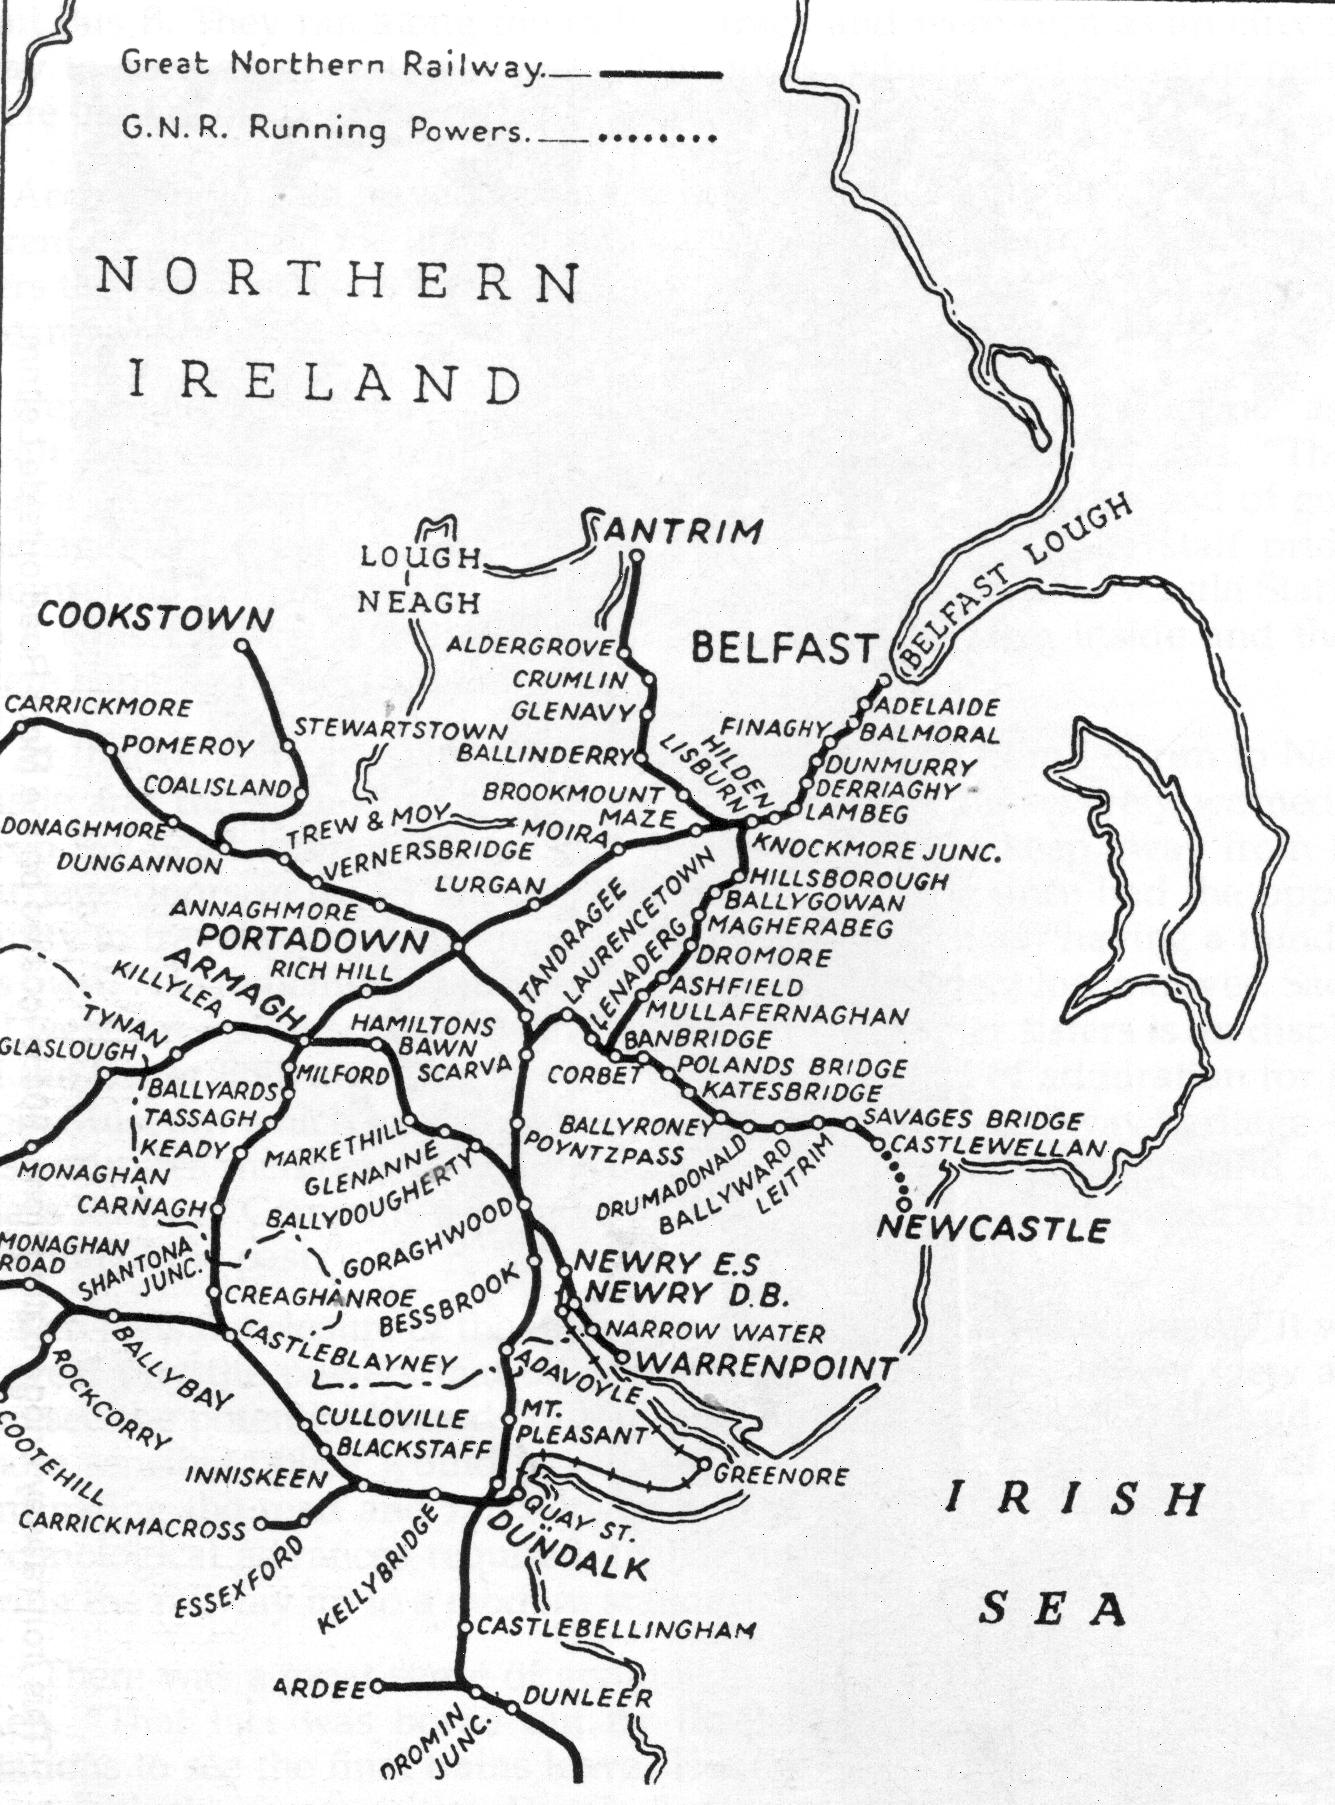 Great North Company railway lines